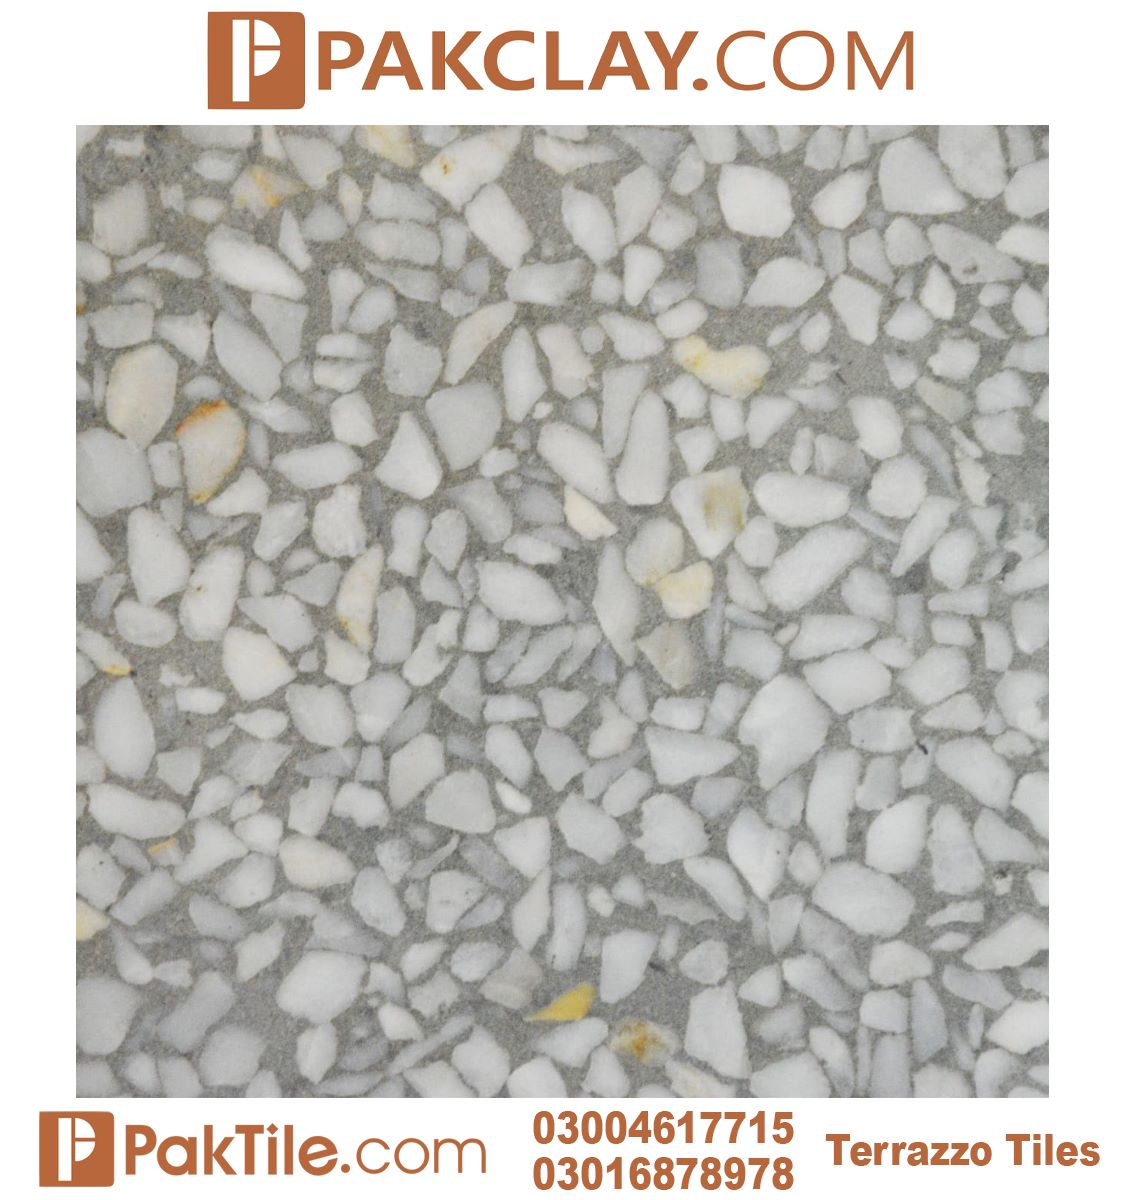 Terrazzo Tiles Price in Pakistan